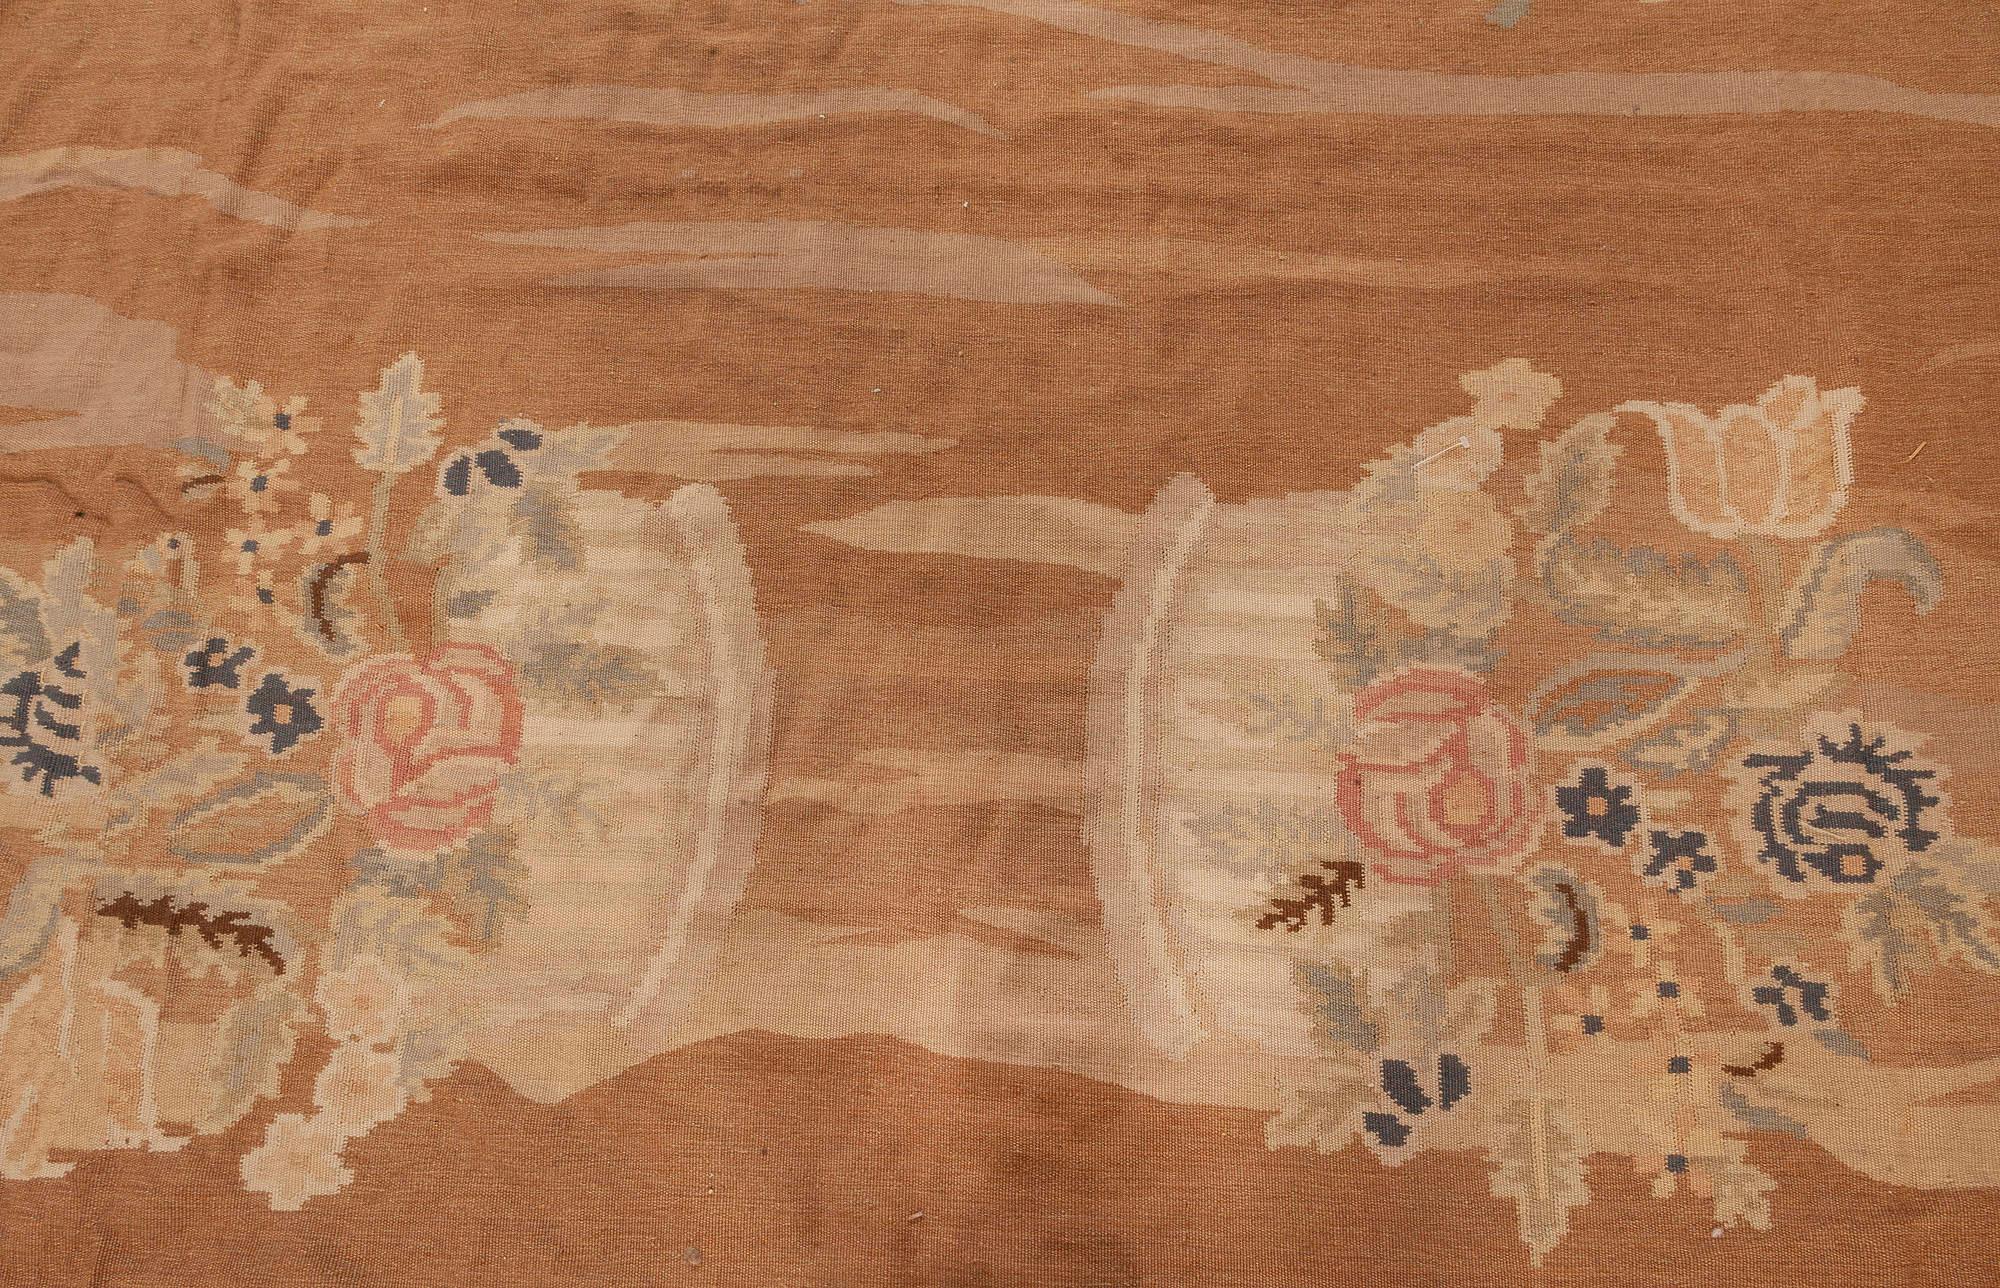 Contemporary Bessarabian style floral handmade wool rug by Doris Leslie Blau.
Size: 12'10